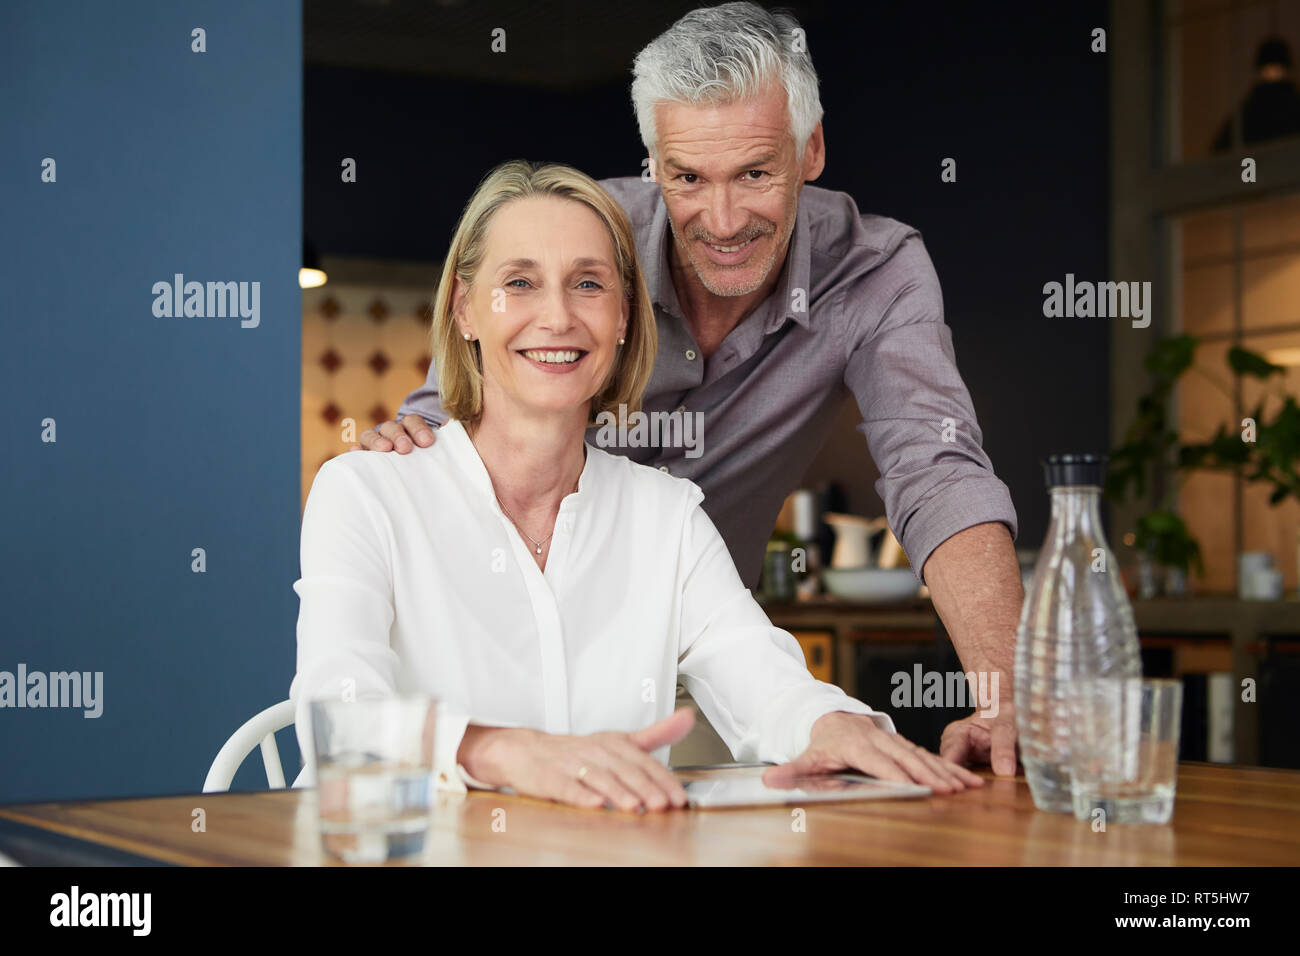 Portrait of smiling mature couple at home Banque D'Images